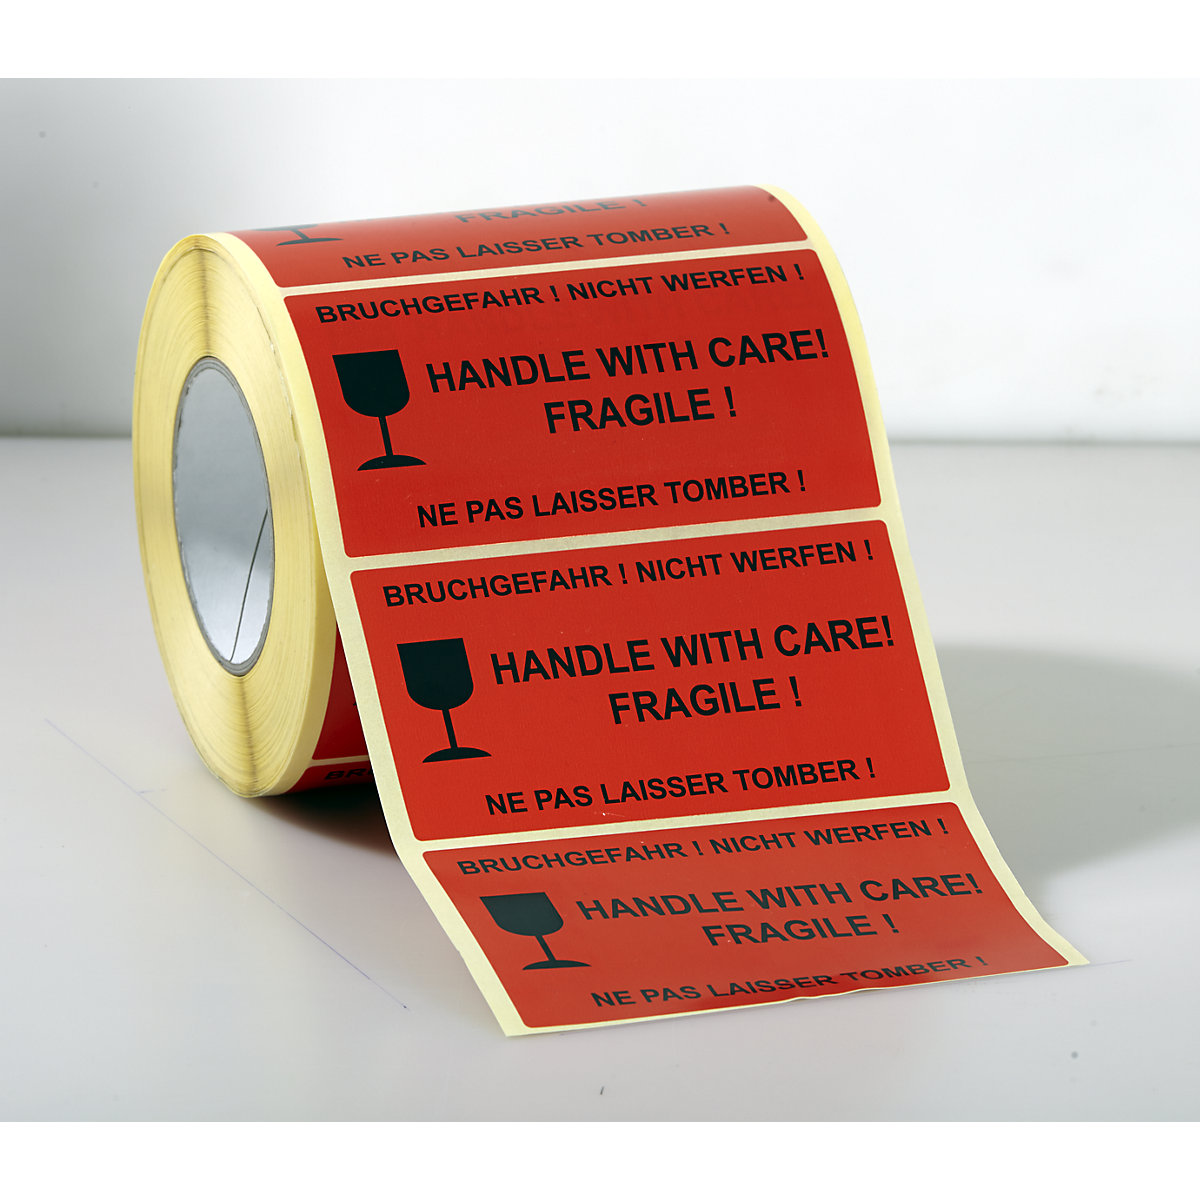 Upozoravajuće etikete, 1000 komada u roli, natpis »Handle with care! Fragile!«-5